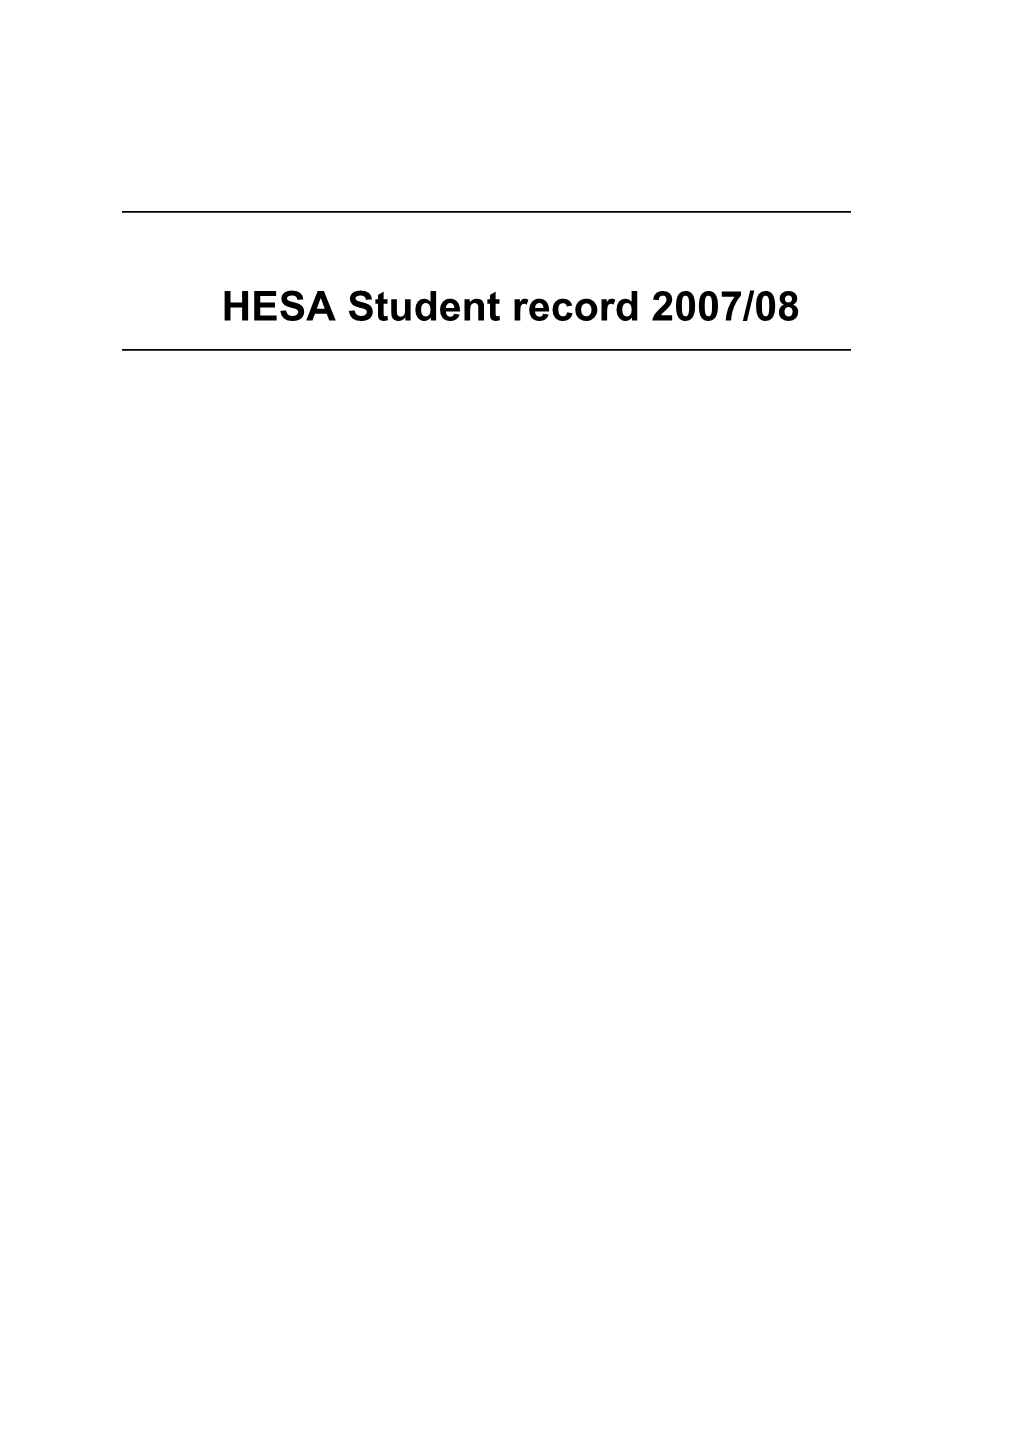 HESA Student Record 2007/08